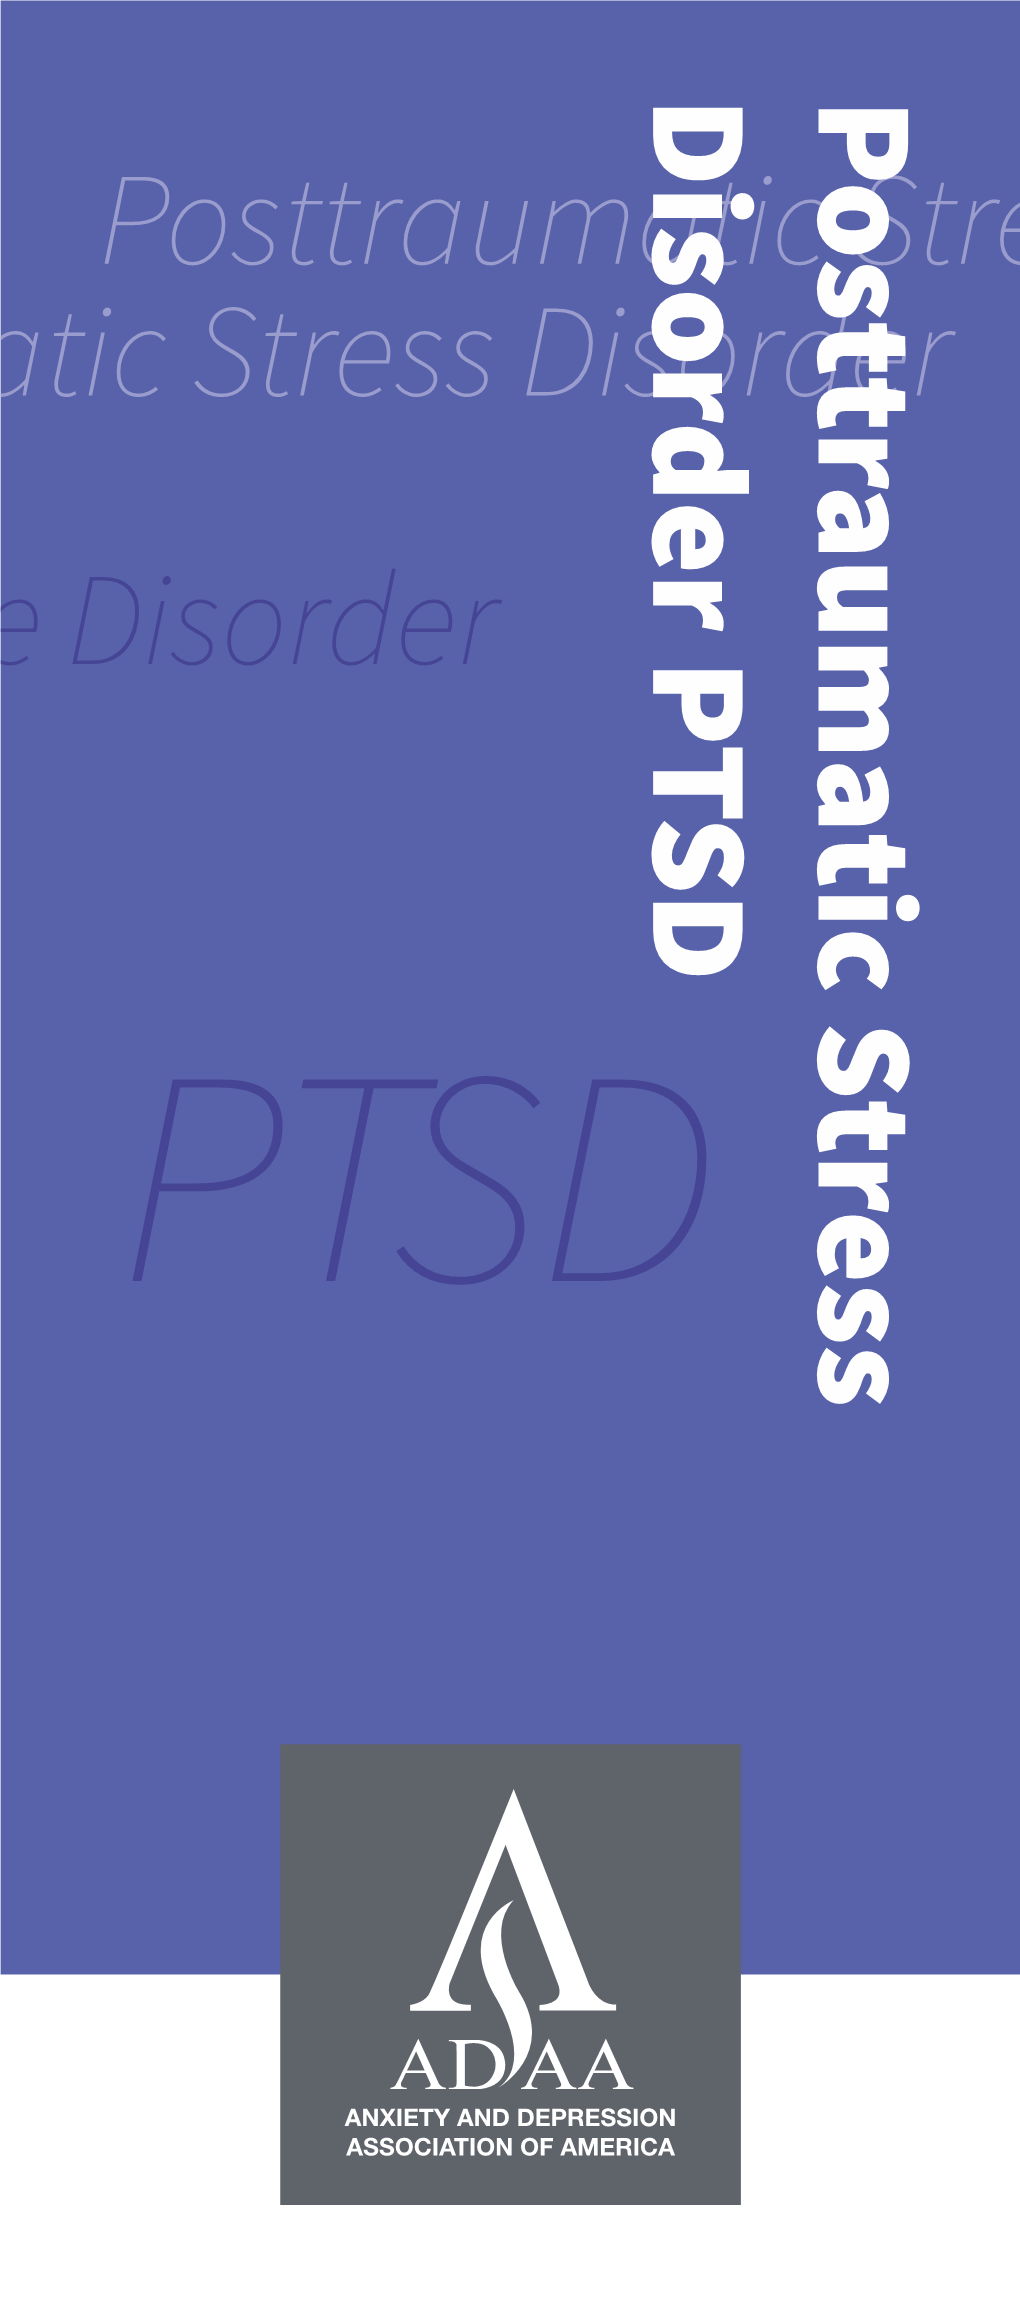 Posttraumatic Stress Disorder, Or PTSD